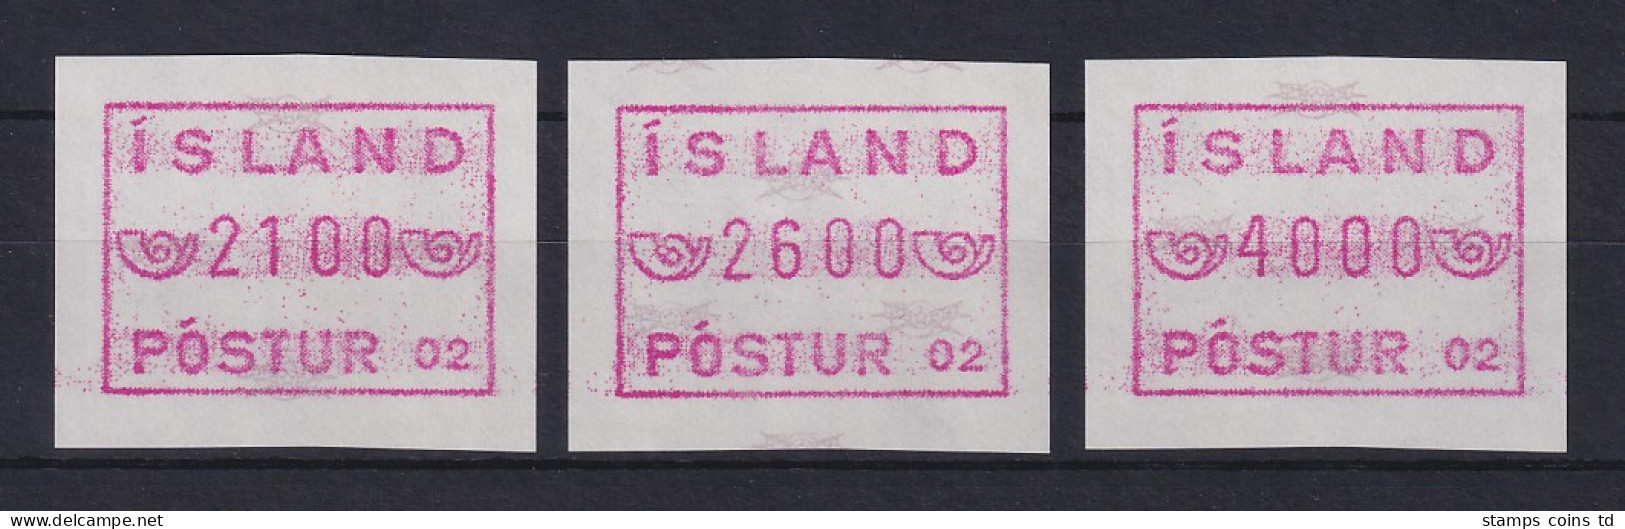 Island Frama-ATM  Aut.-Nr. 02, Mi.-Nr. 1.2 D Satz 2100-2600-4000 ** (1989) - Frankeervignetten (Frama)